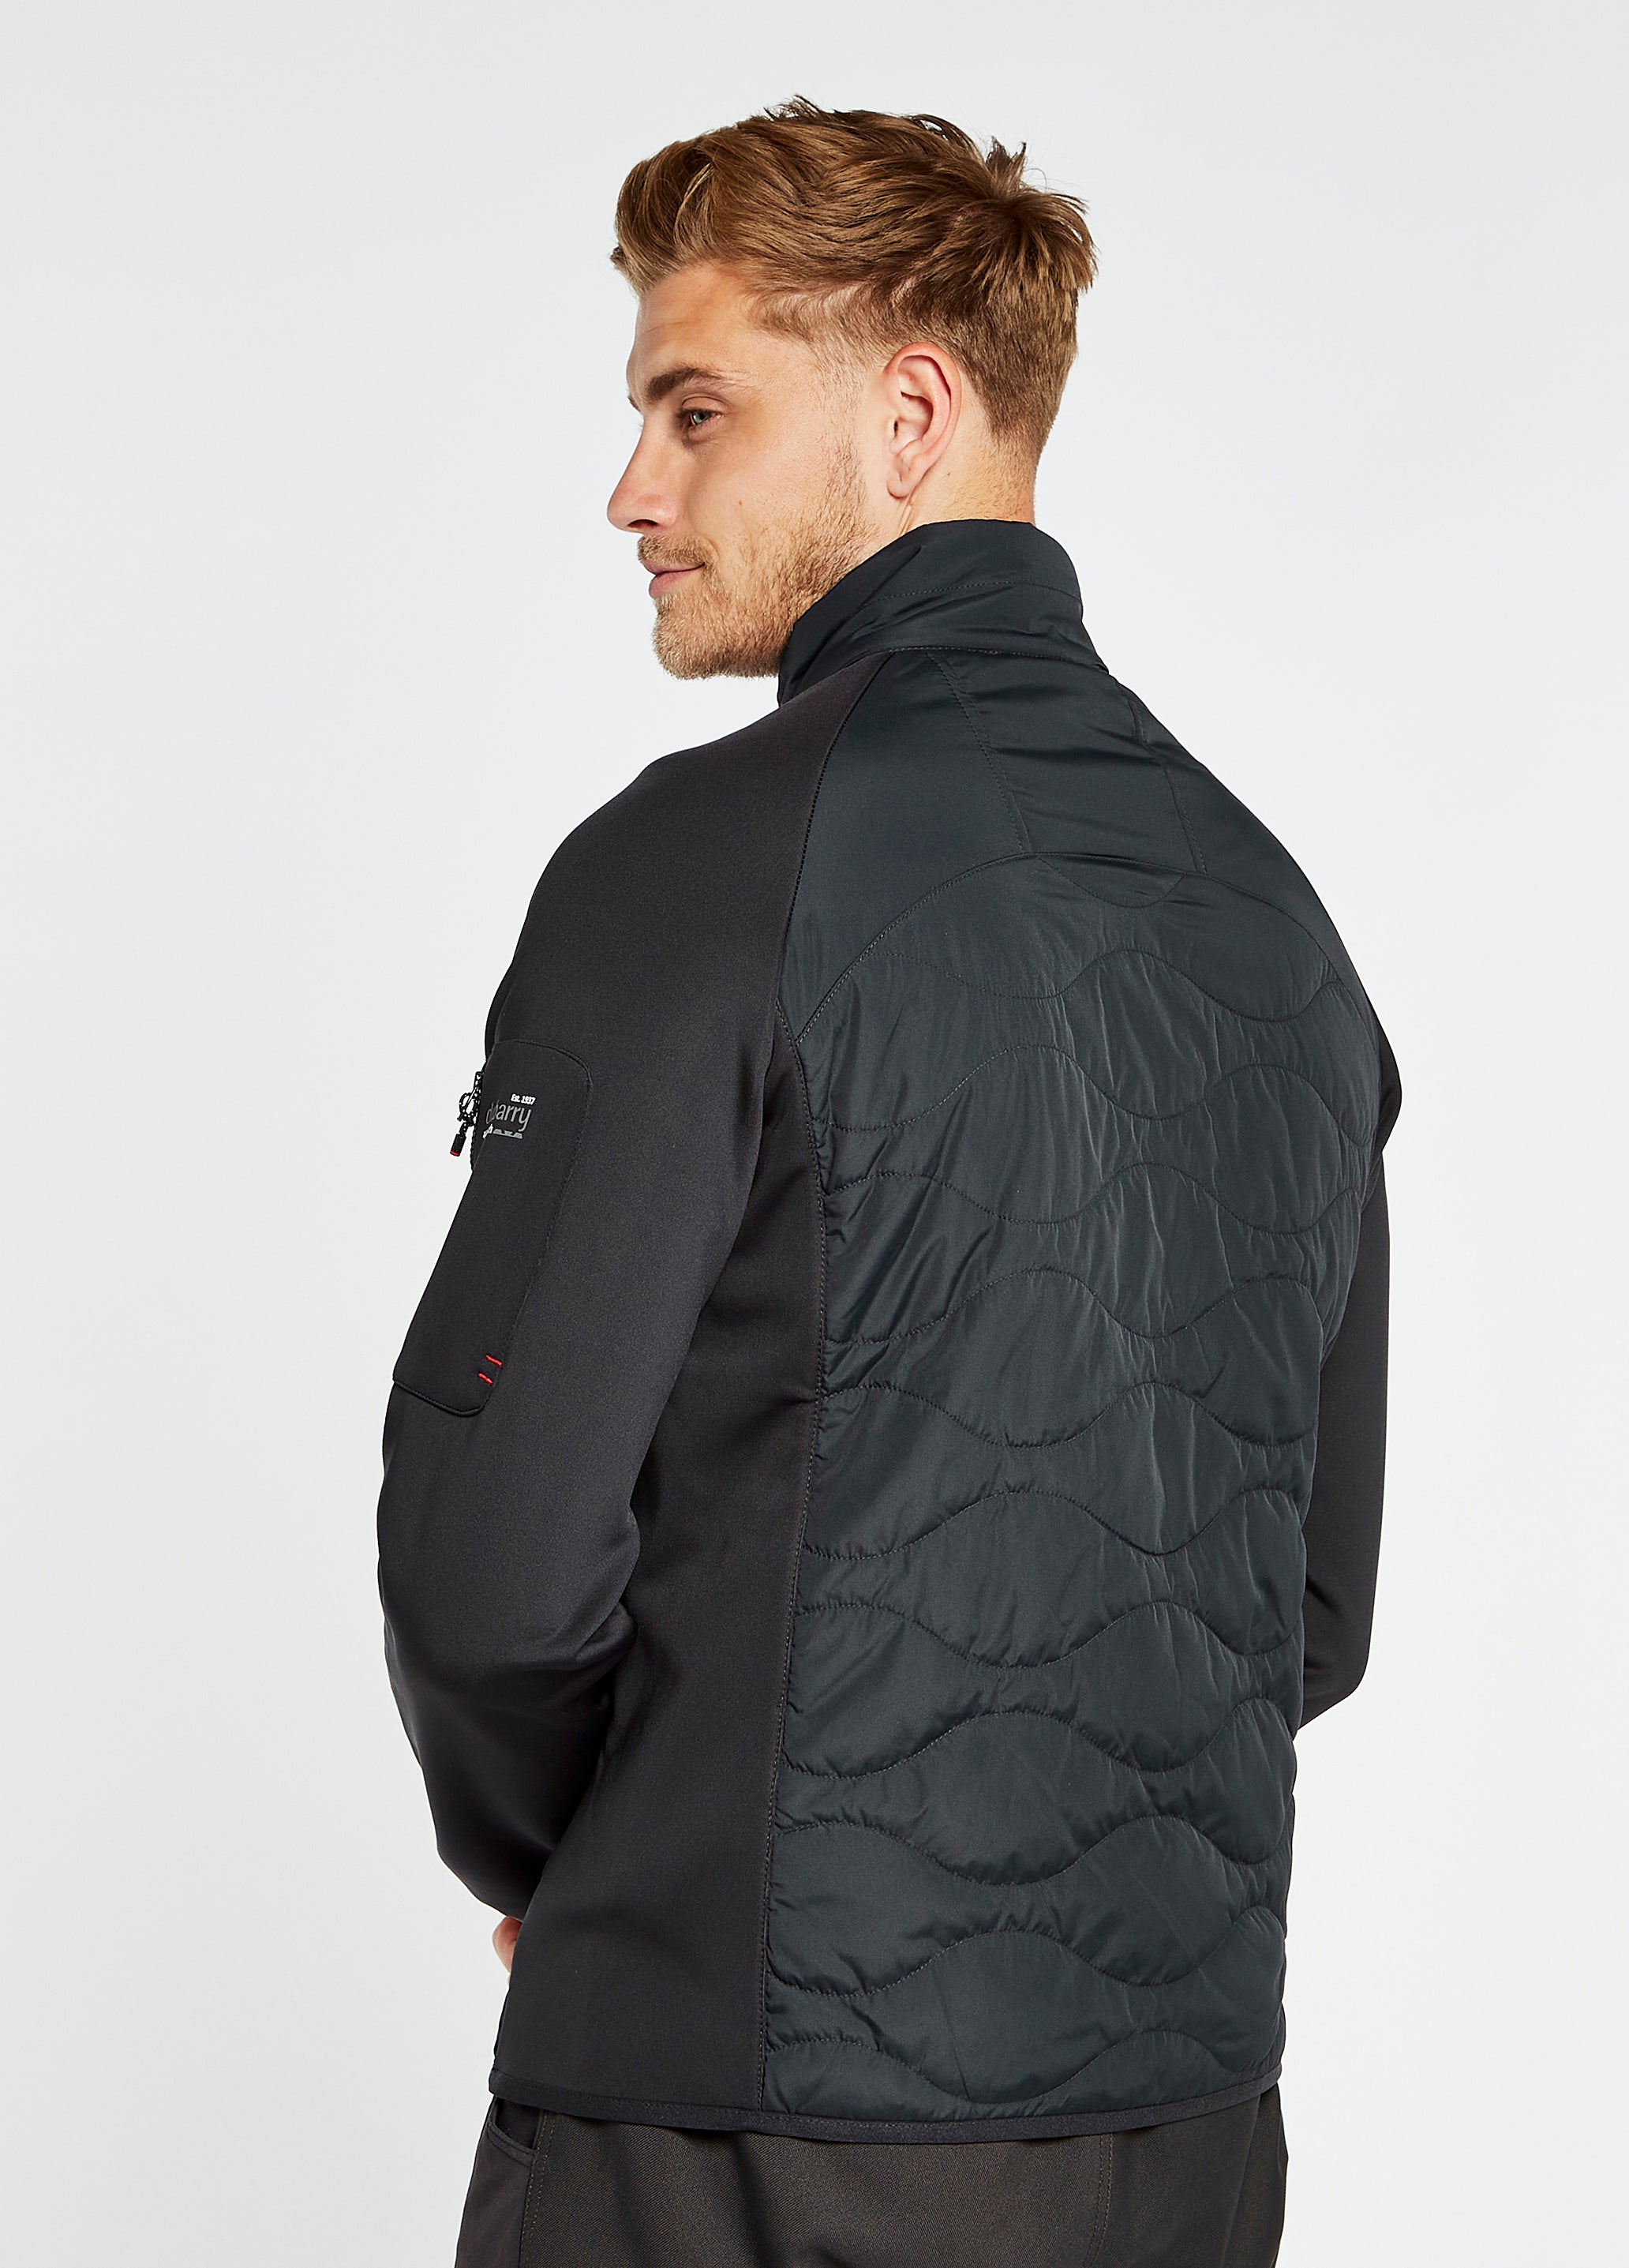 Atlantica Unisex Hybrid jacket - Graphite